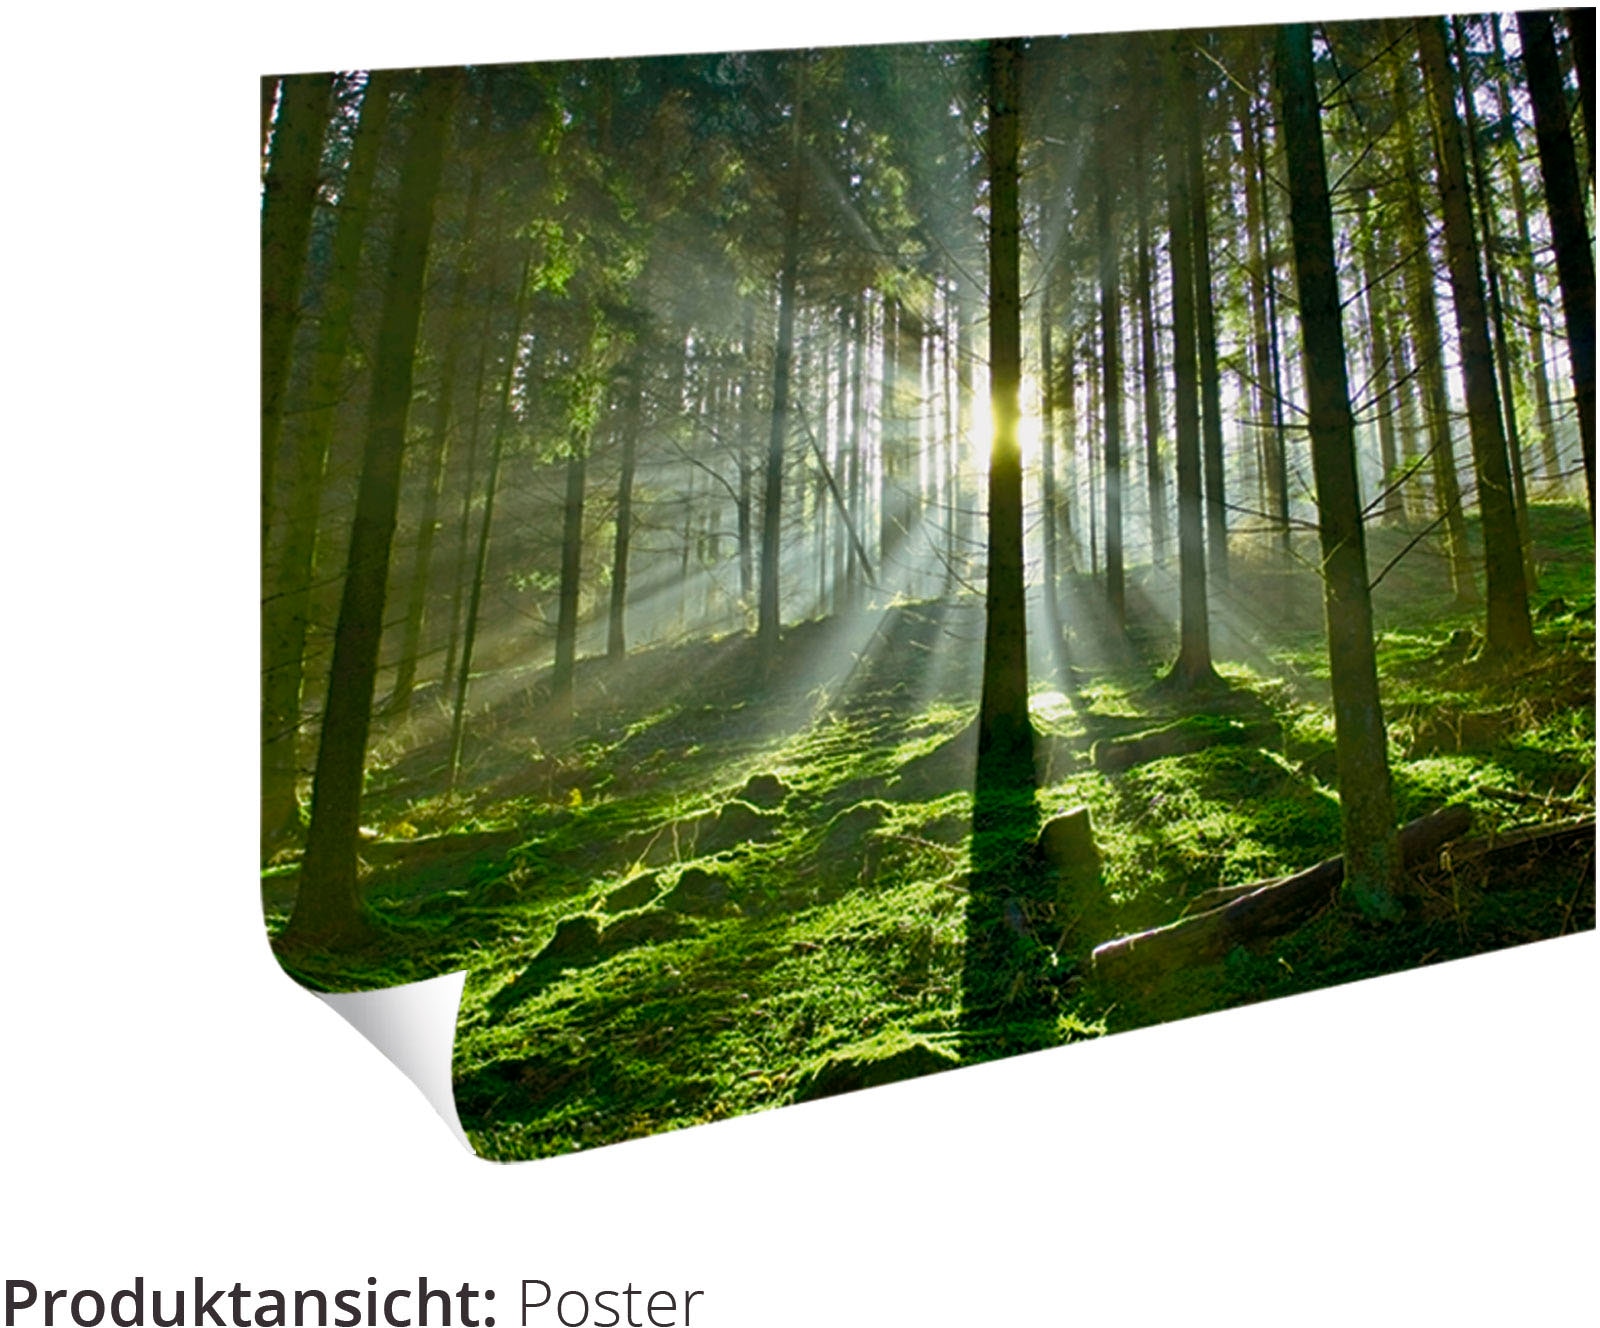 Artland Kunstdruck »Der einsame Baum«, Wiesen & Bäume, (1 St.), als Alubild, Leinwandbild, Wandaufkleber oder Poster in versch. Größen